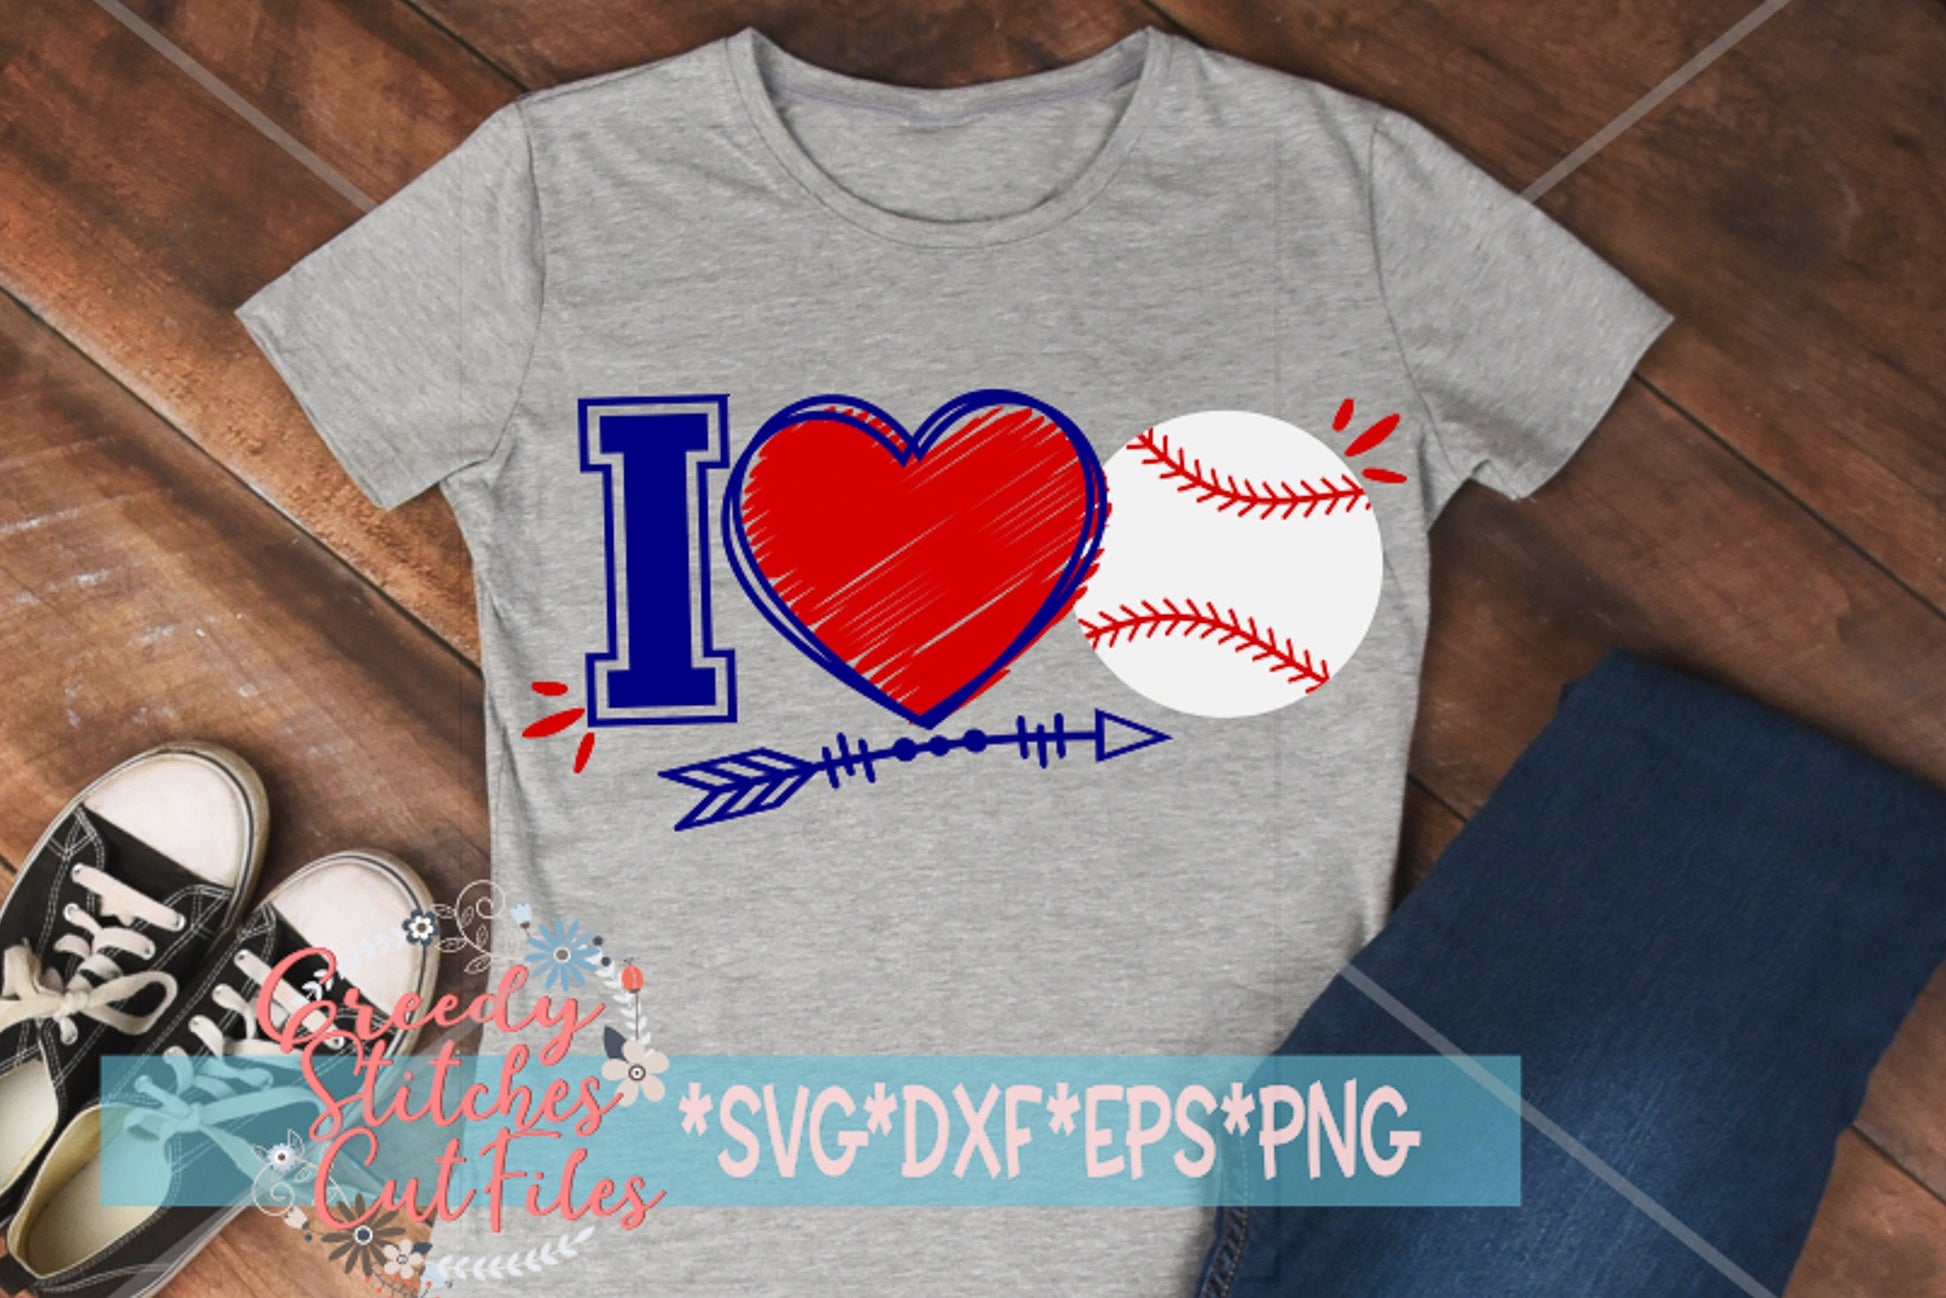 I Love Baseball svg, eps, dxf, png. Baseball Love SvG | Love Baseball DxF | Baseball SvG | Baseball Mom SvG | Instant Download Cut Files